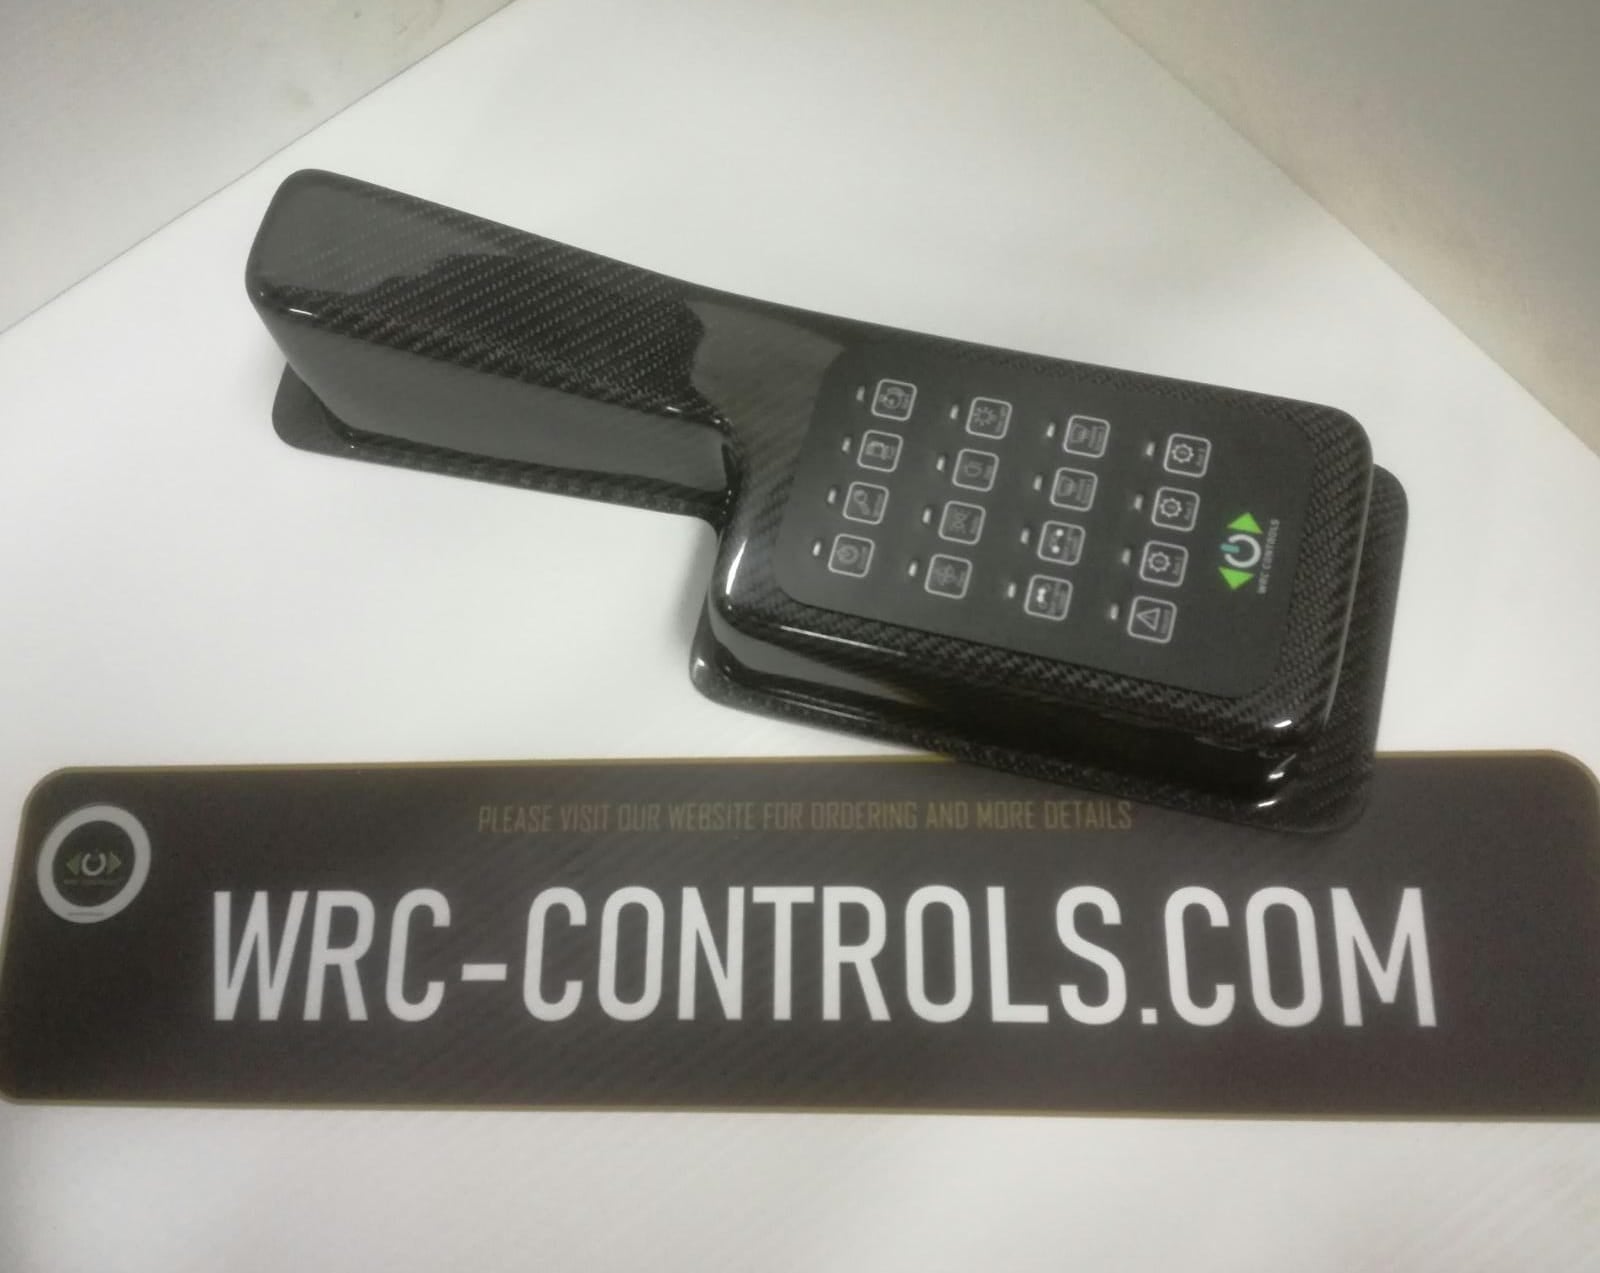 New product: Carbon Fibre Centre Console with backlit keypad – WRC Controls